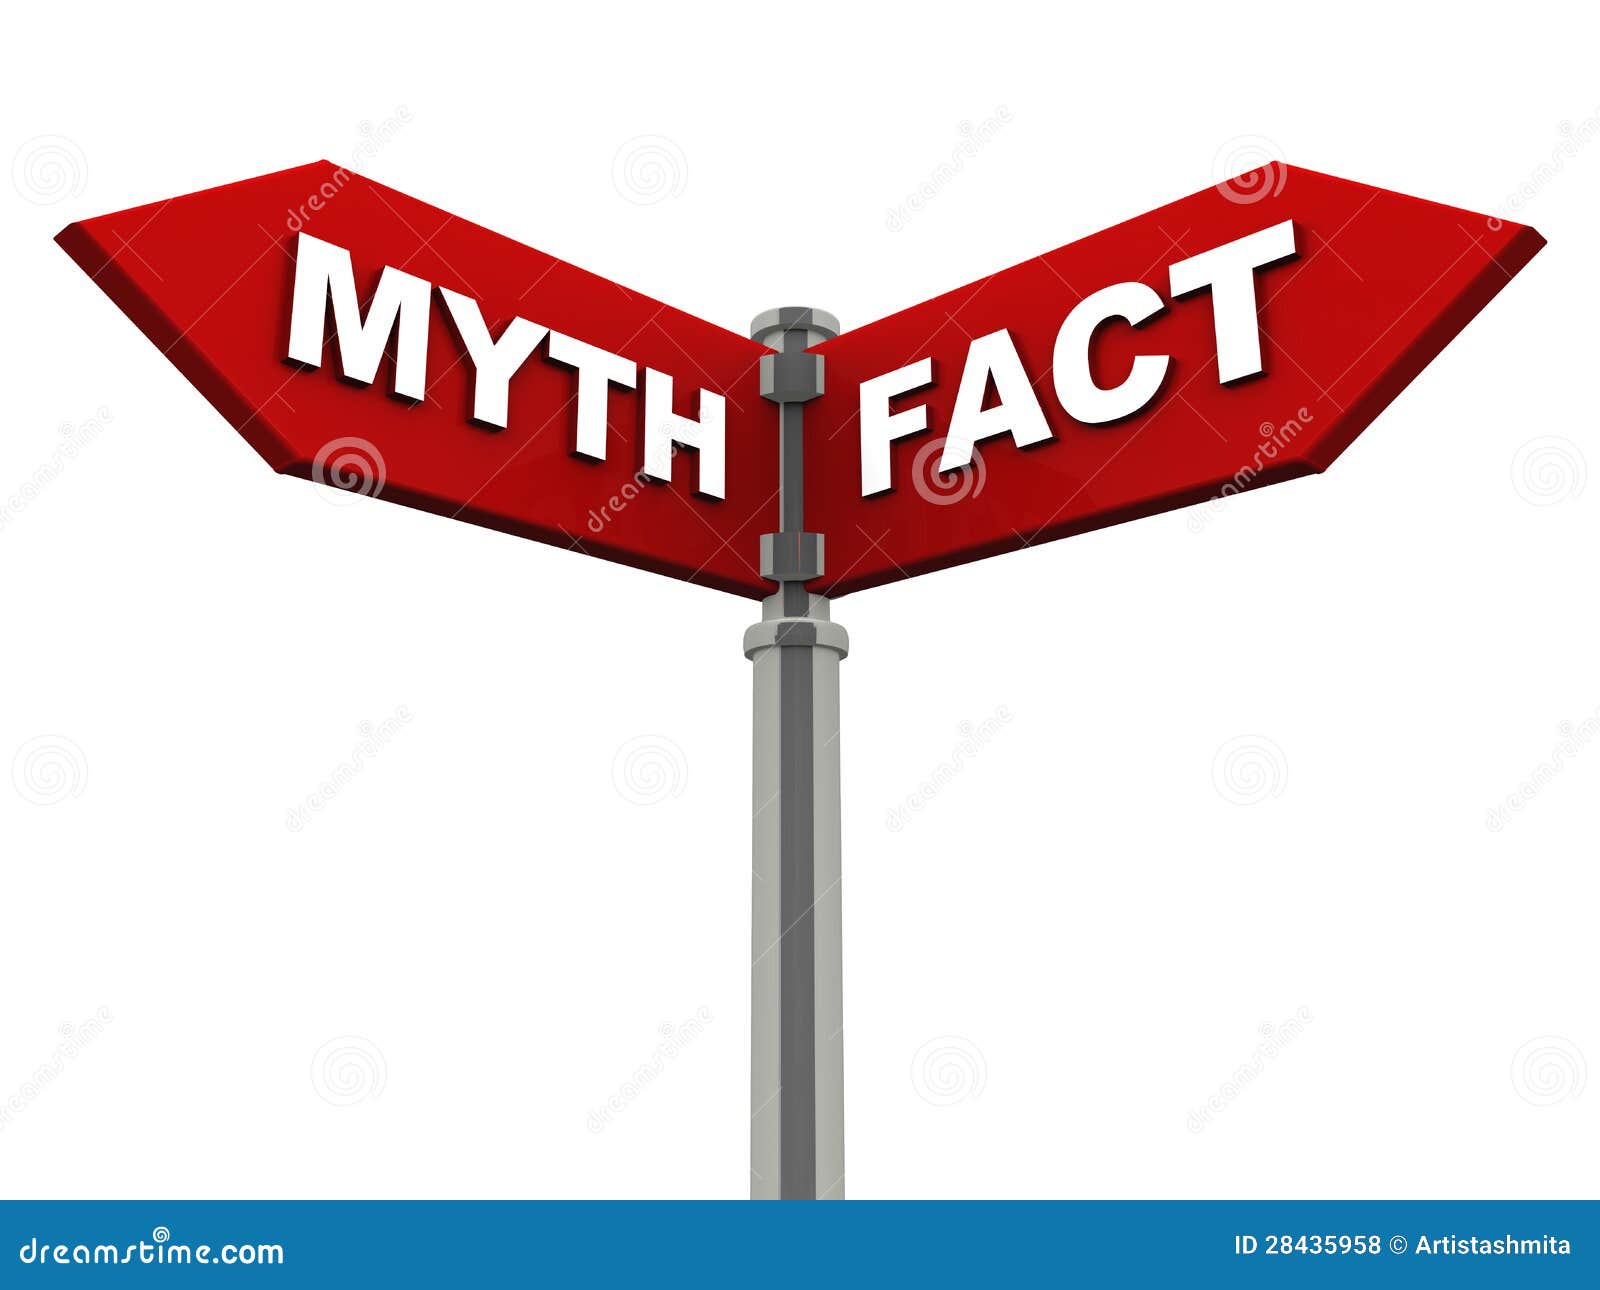 myth or fact